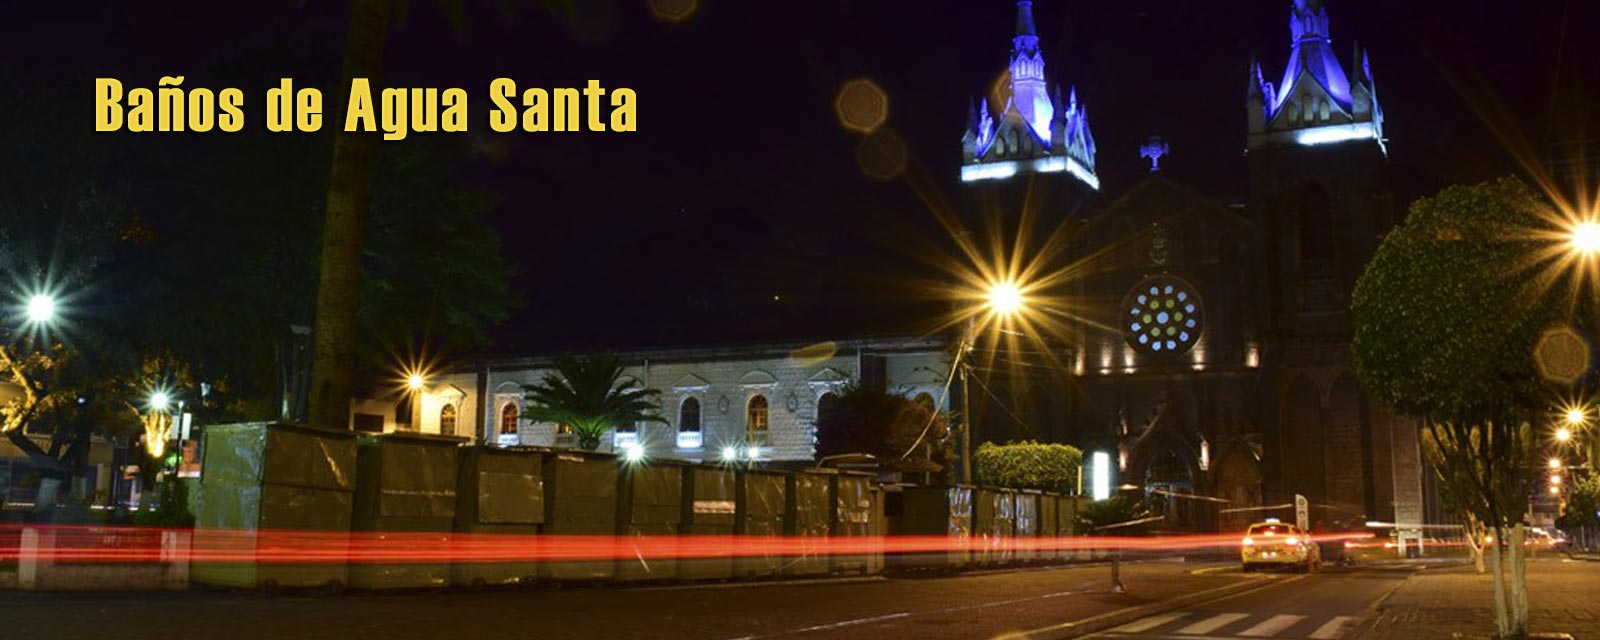 banos_agua_santa_hotspots_tours1